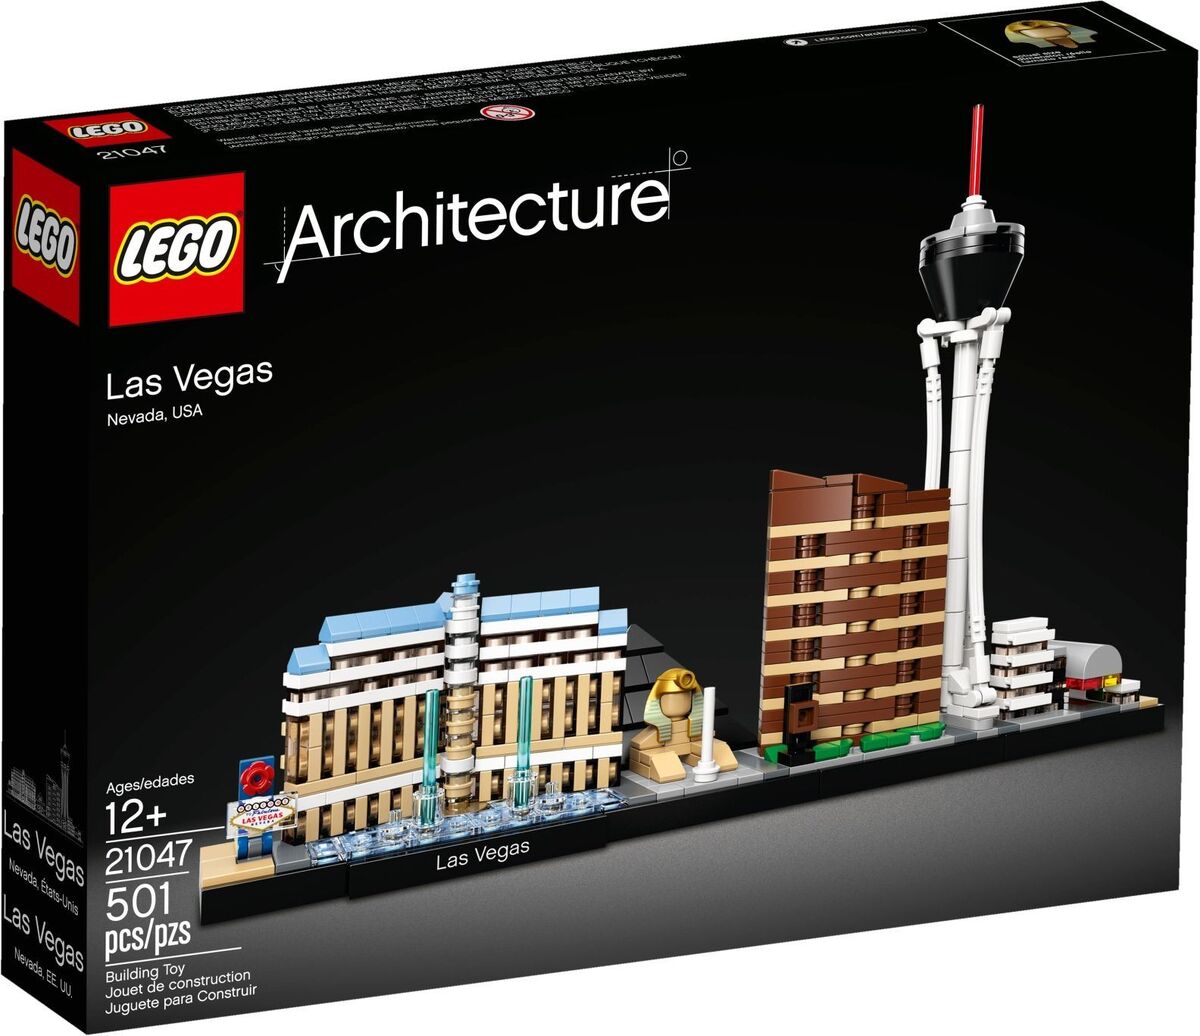 Brickfinder - LEGO Architecture Las Vegas (21047) Official Images